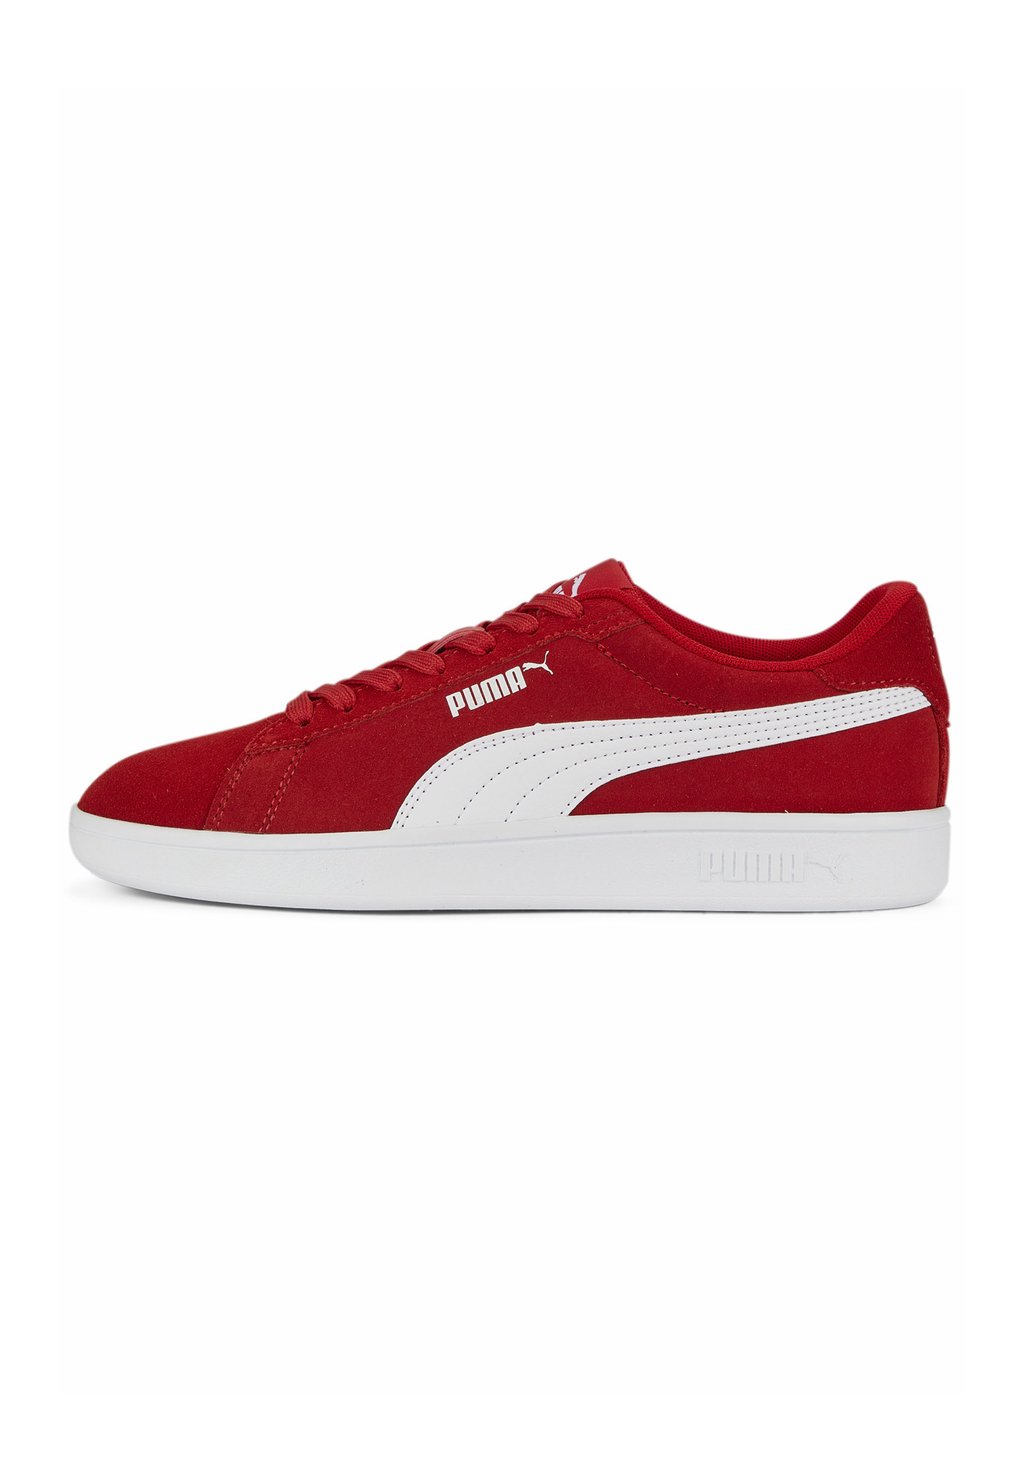 Кроссовки низкие SMASH 3 0 Puma, цвет for all time red white